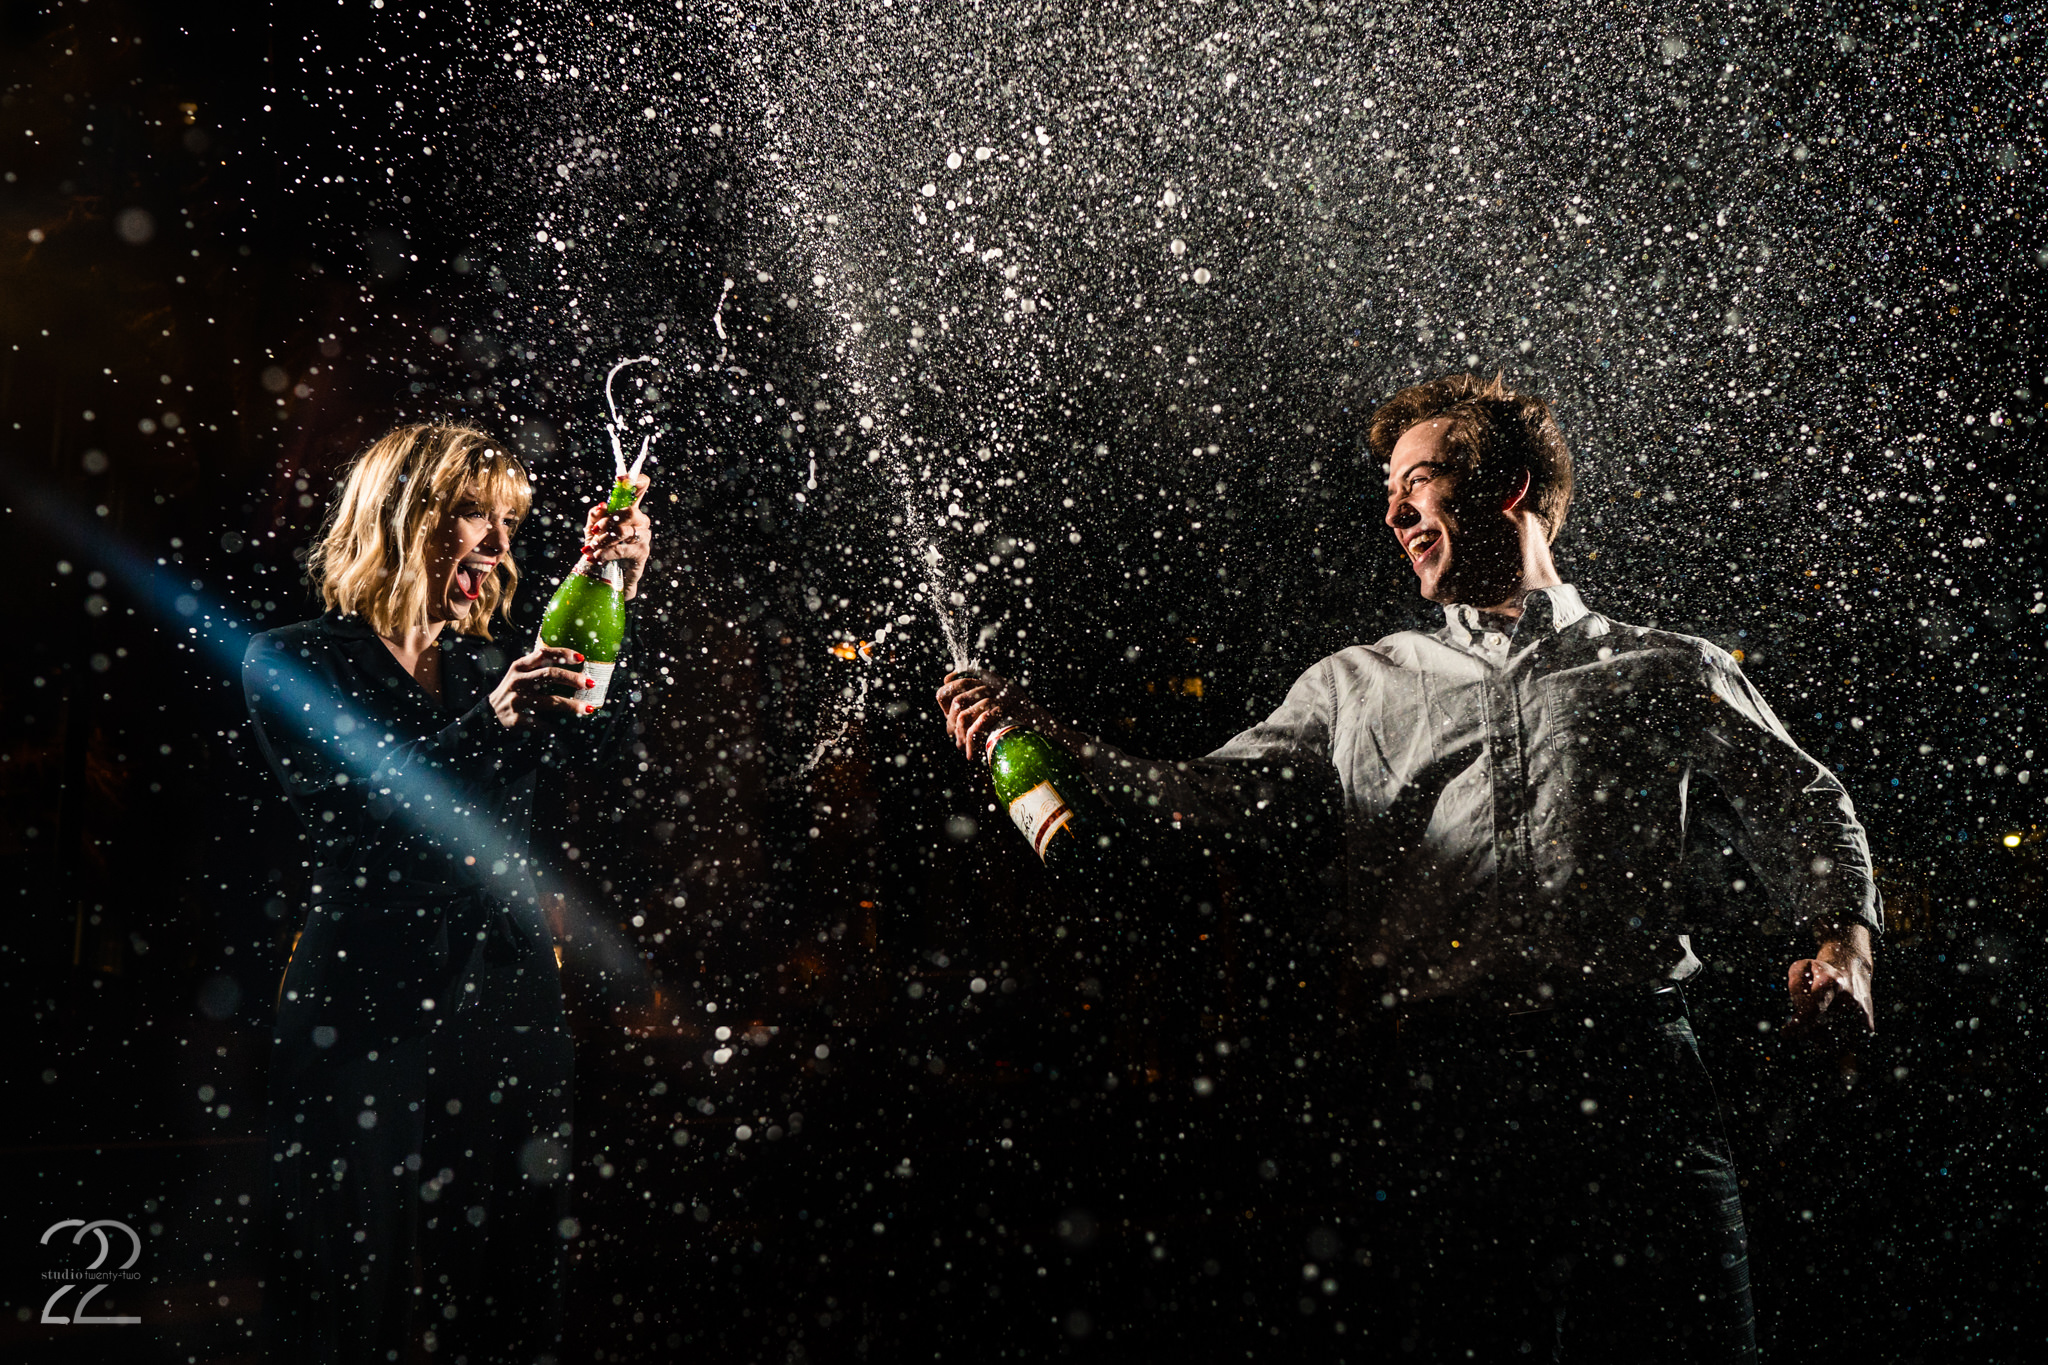 New Years Eve Engagement Photos - Studio 22 Photography - Champagne Spray Wedding Photos